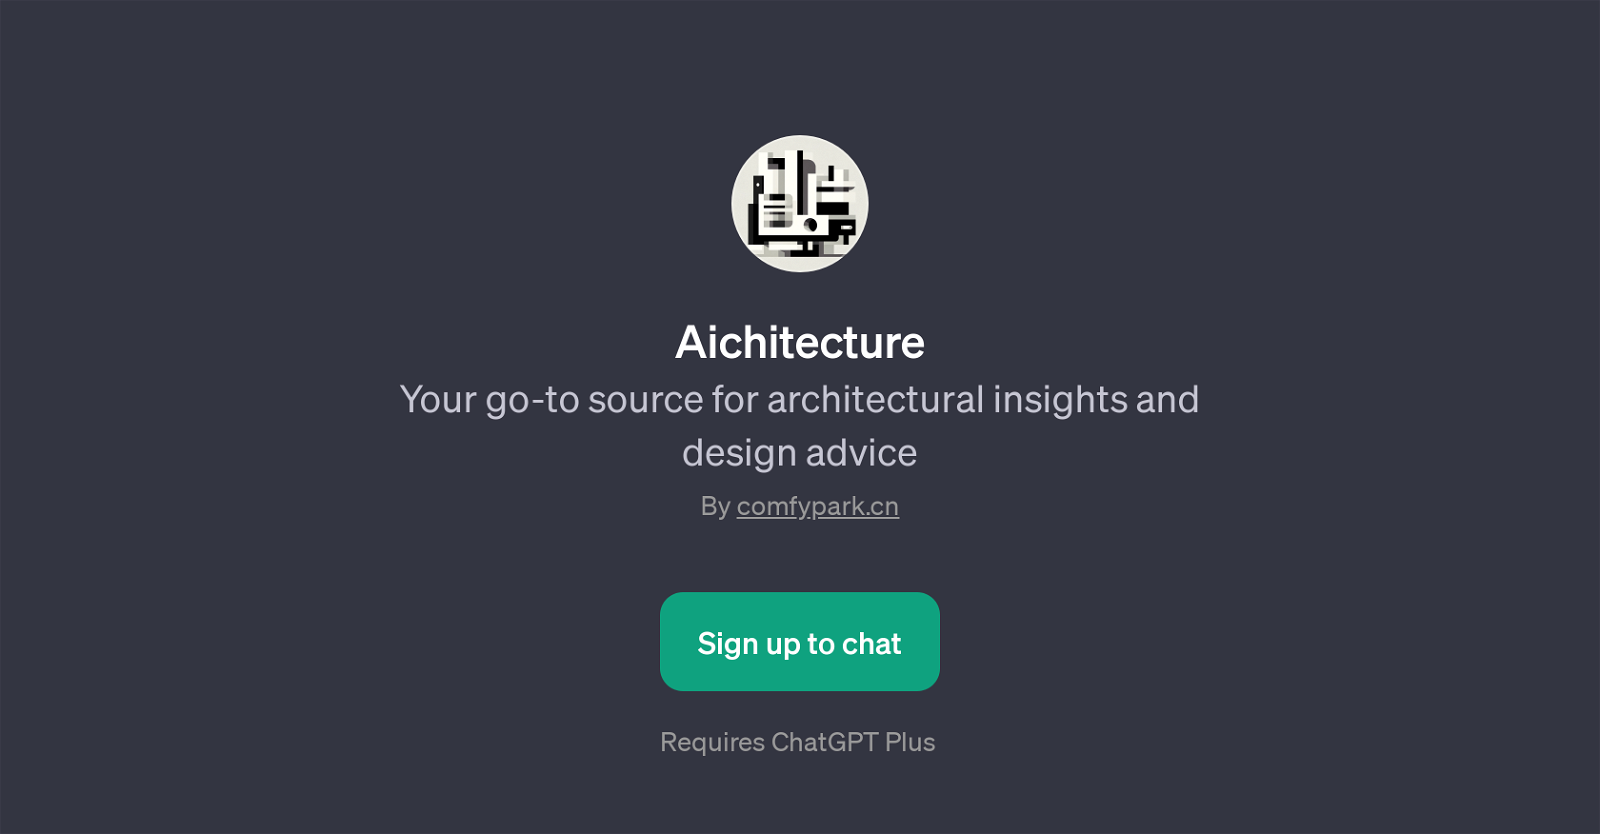 Aichitecture website